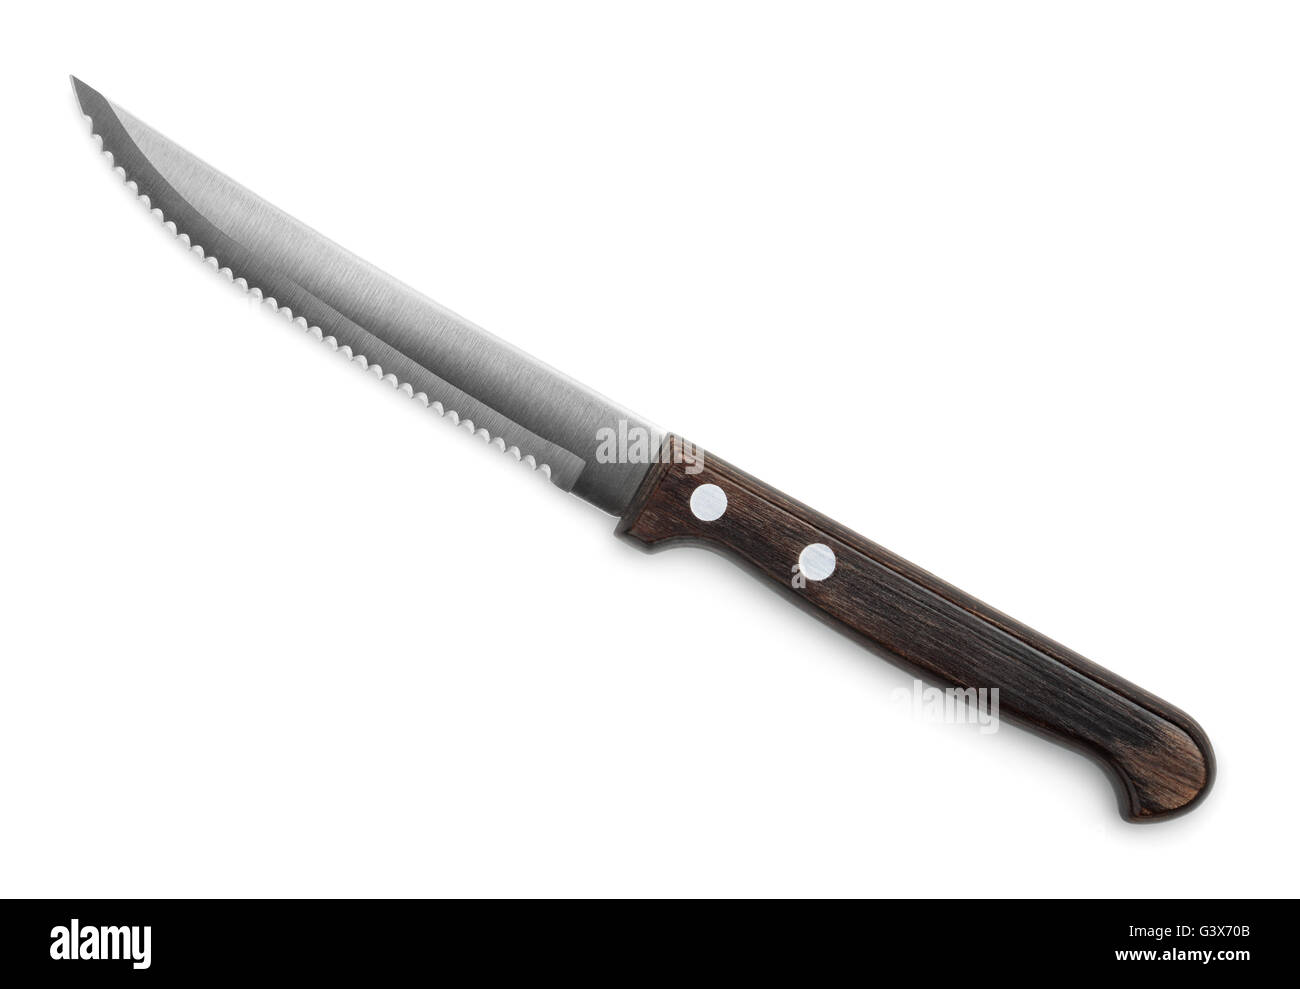 Kitchen knife isolated on white Stock Photo